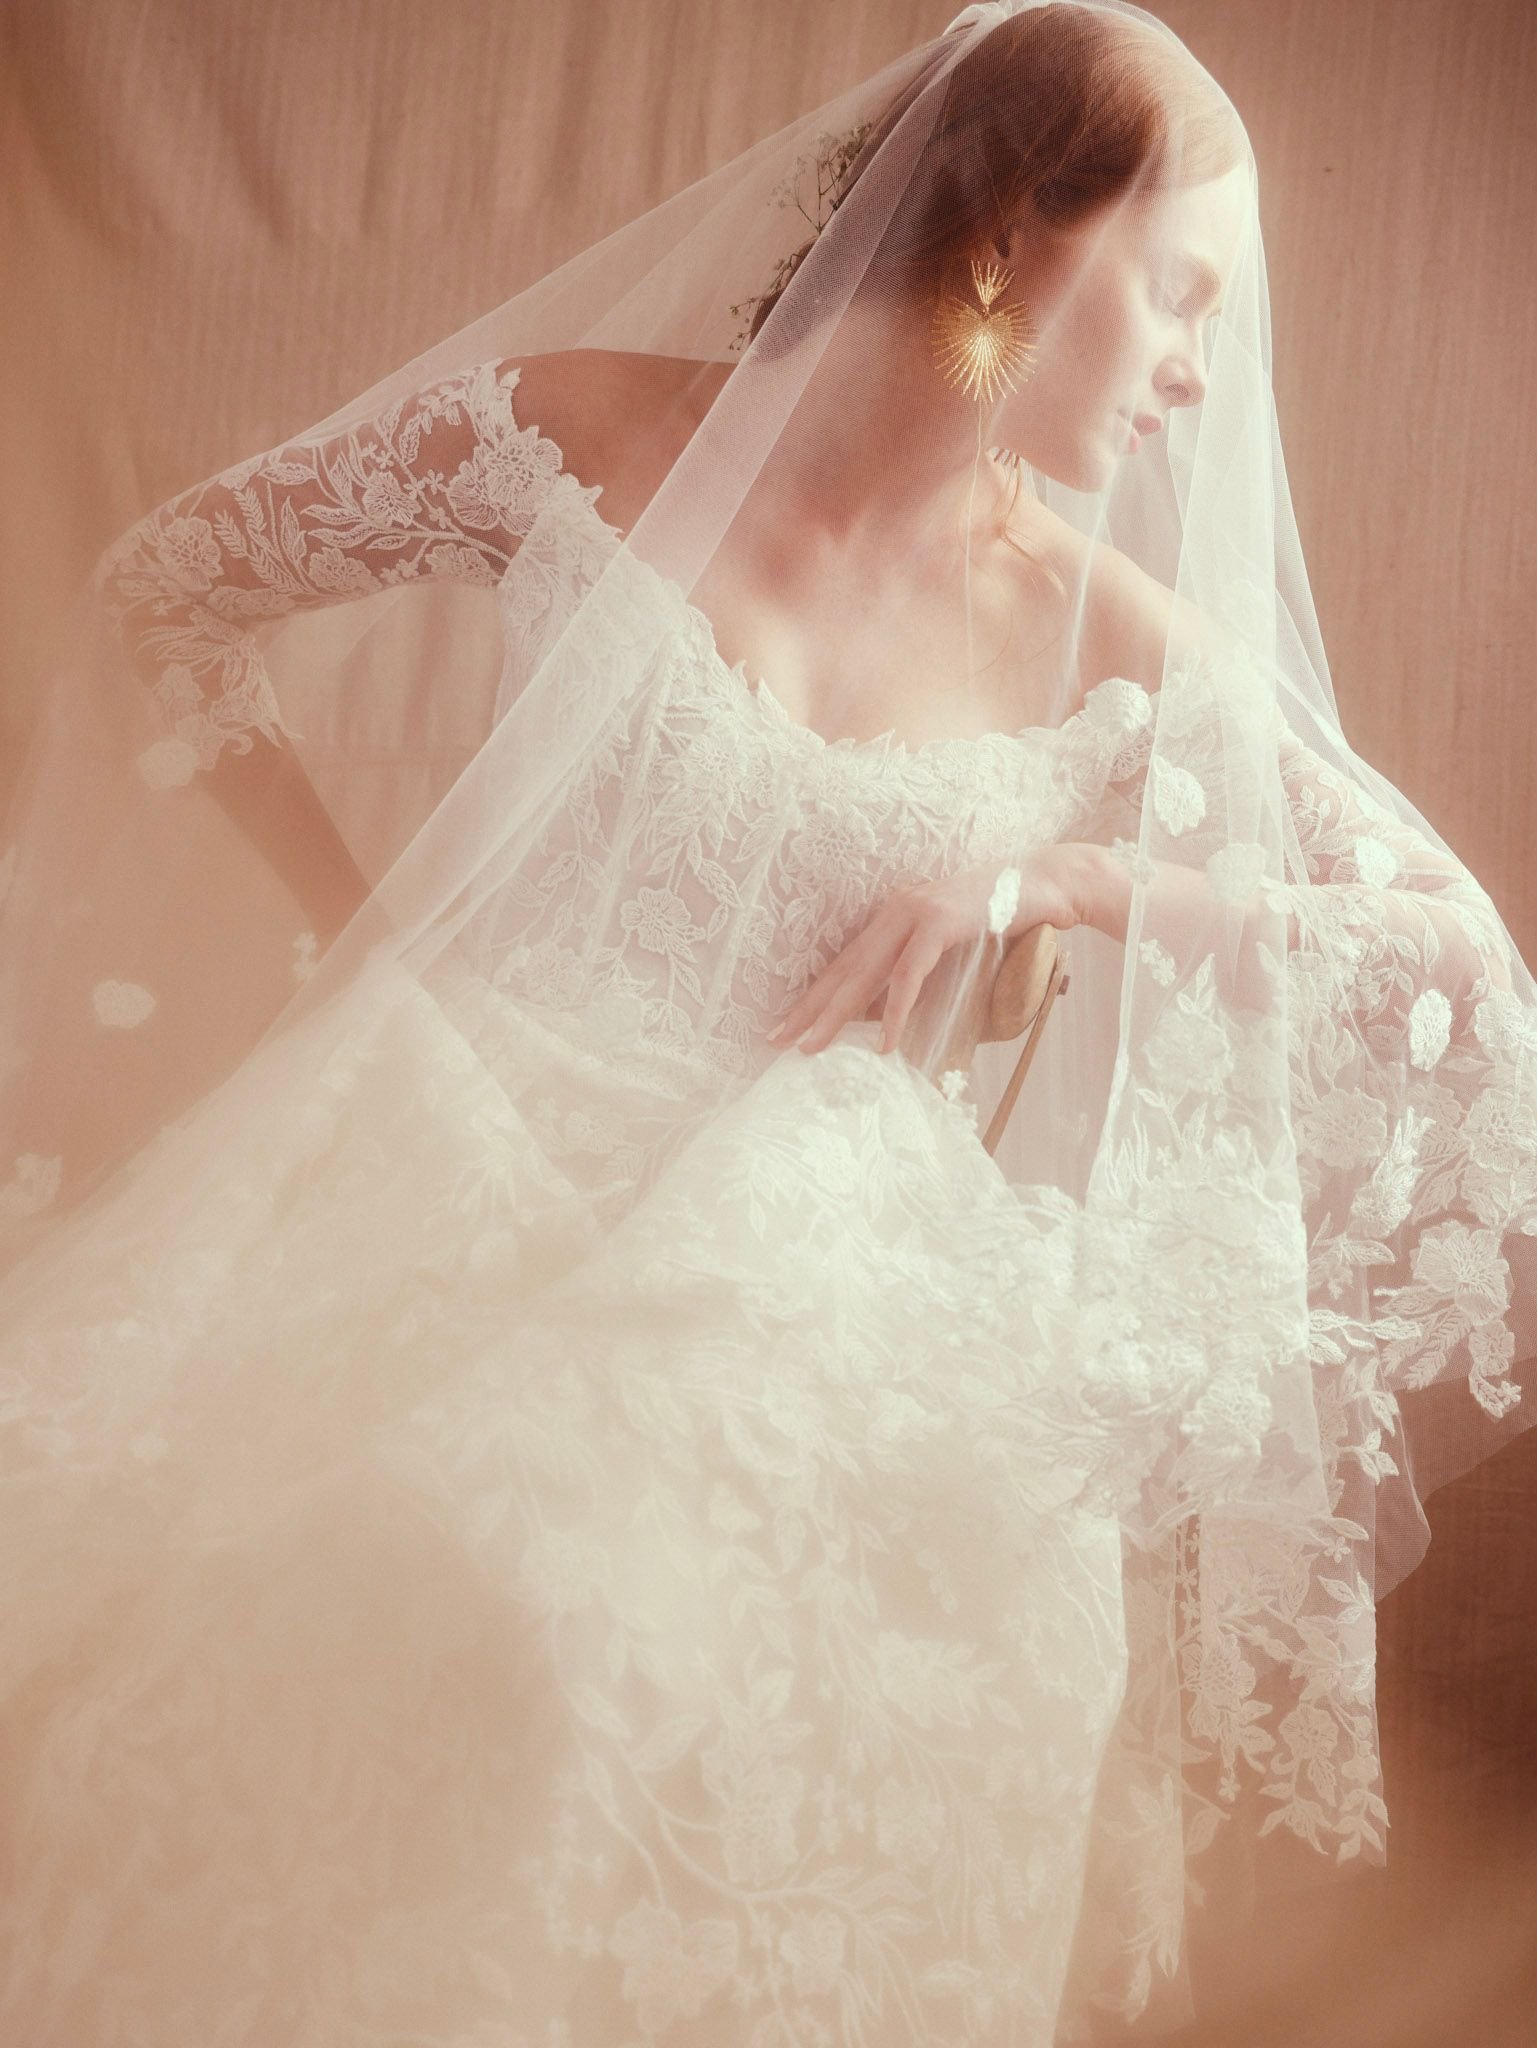 blanc-de-blanc-bridal-boutique-pittsburgh-cleveland-dress-wedding-gown-house-of-renhue-nightingale.jpeg